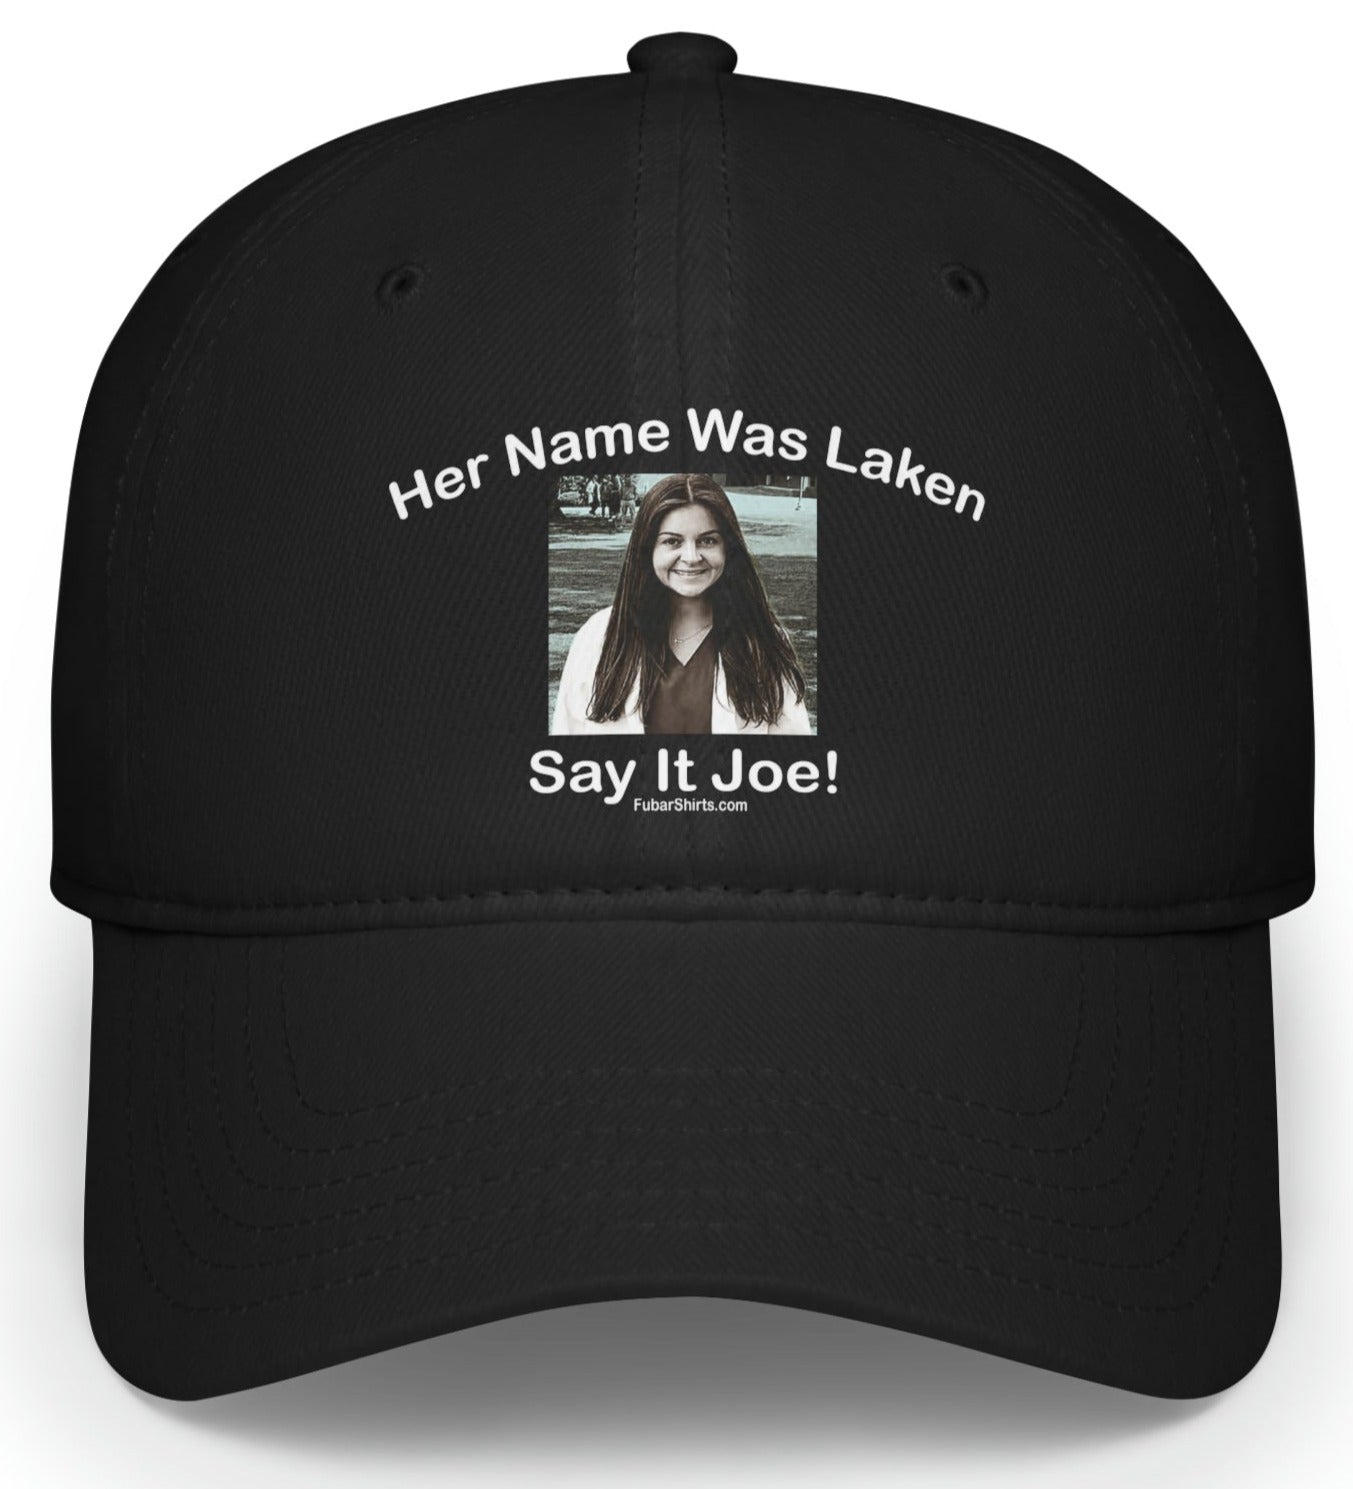 laken riley black baseball cap by fubarshirts.com